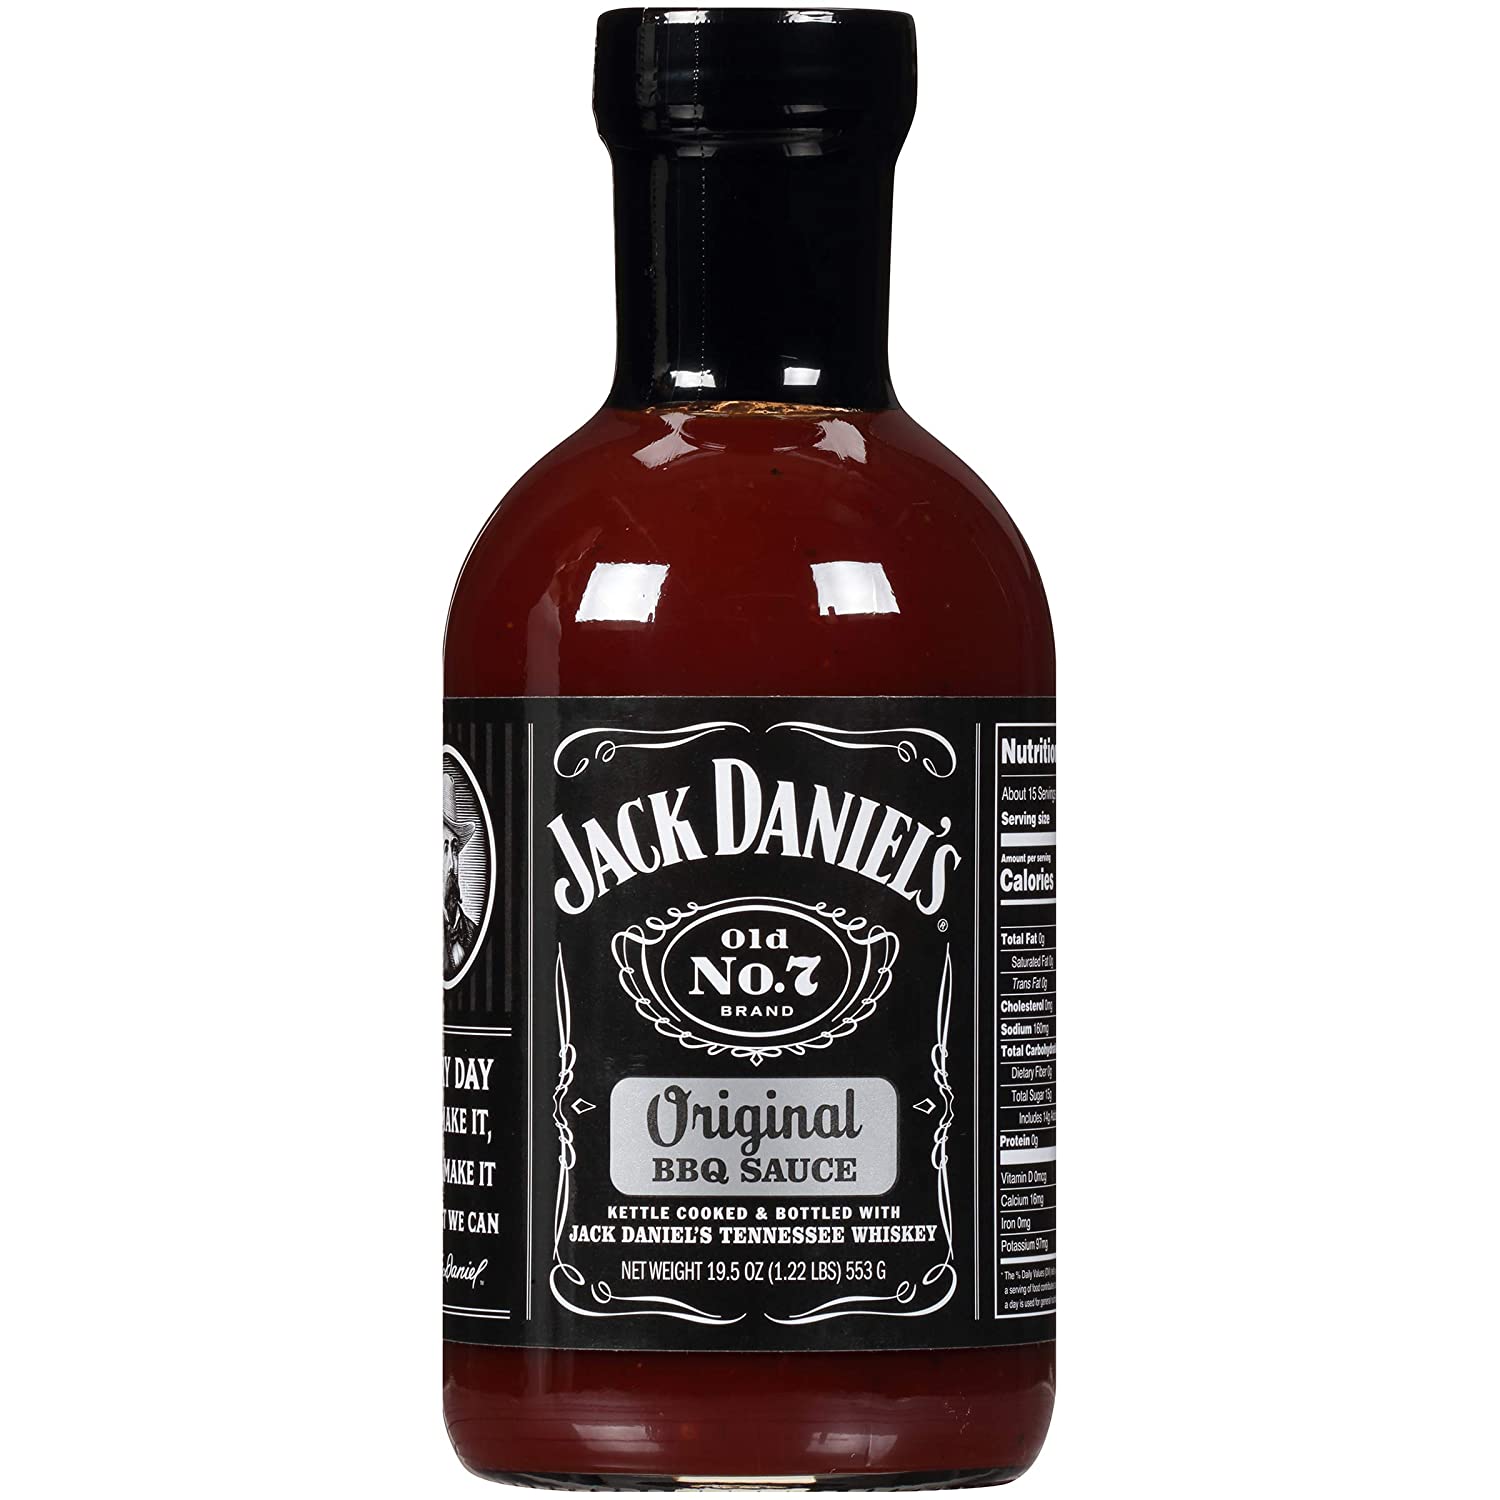 Jack Daniel's Old No. 7 Original